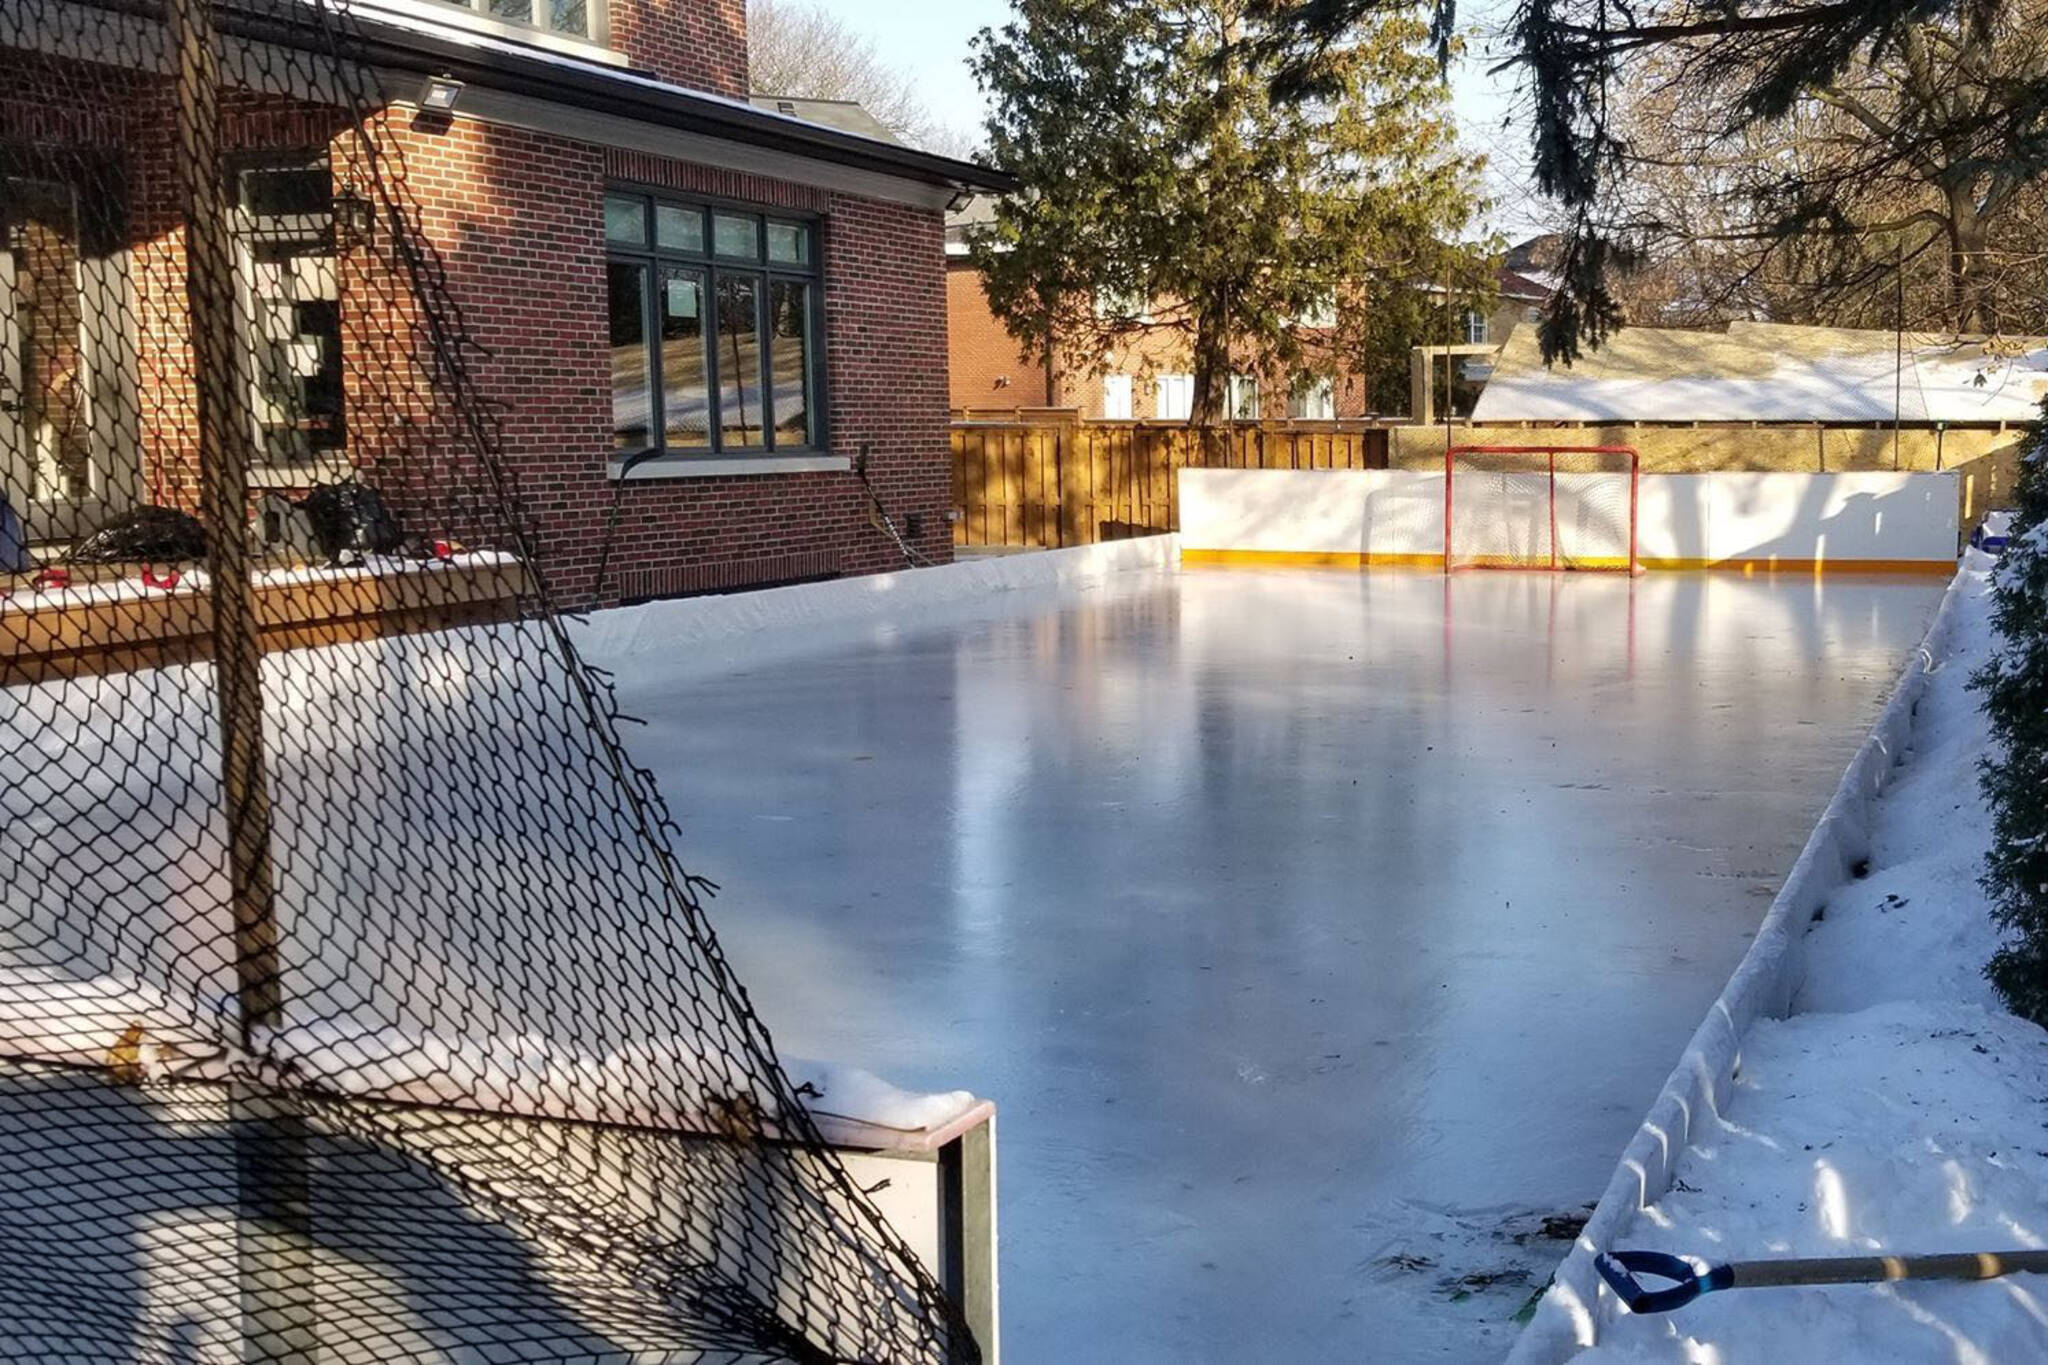 Someone in Toronto created an epic backyard ice rink - 20191224 LeasiDehockeyrink